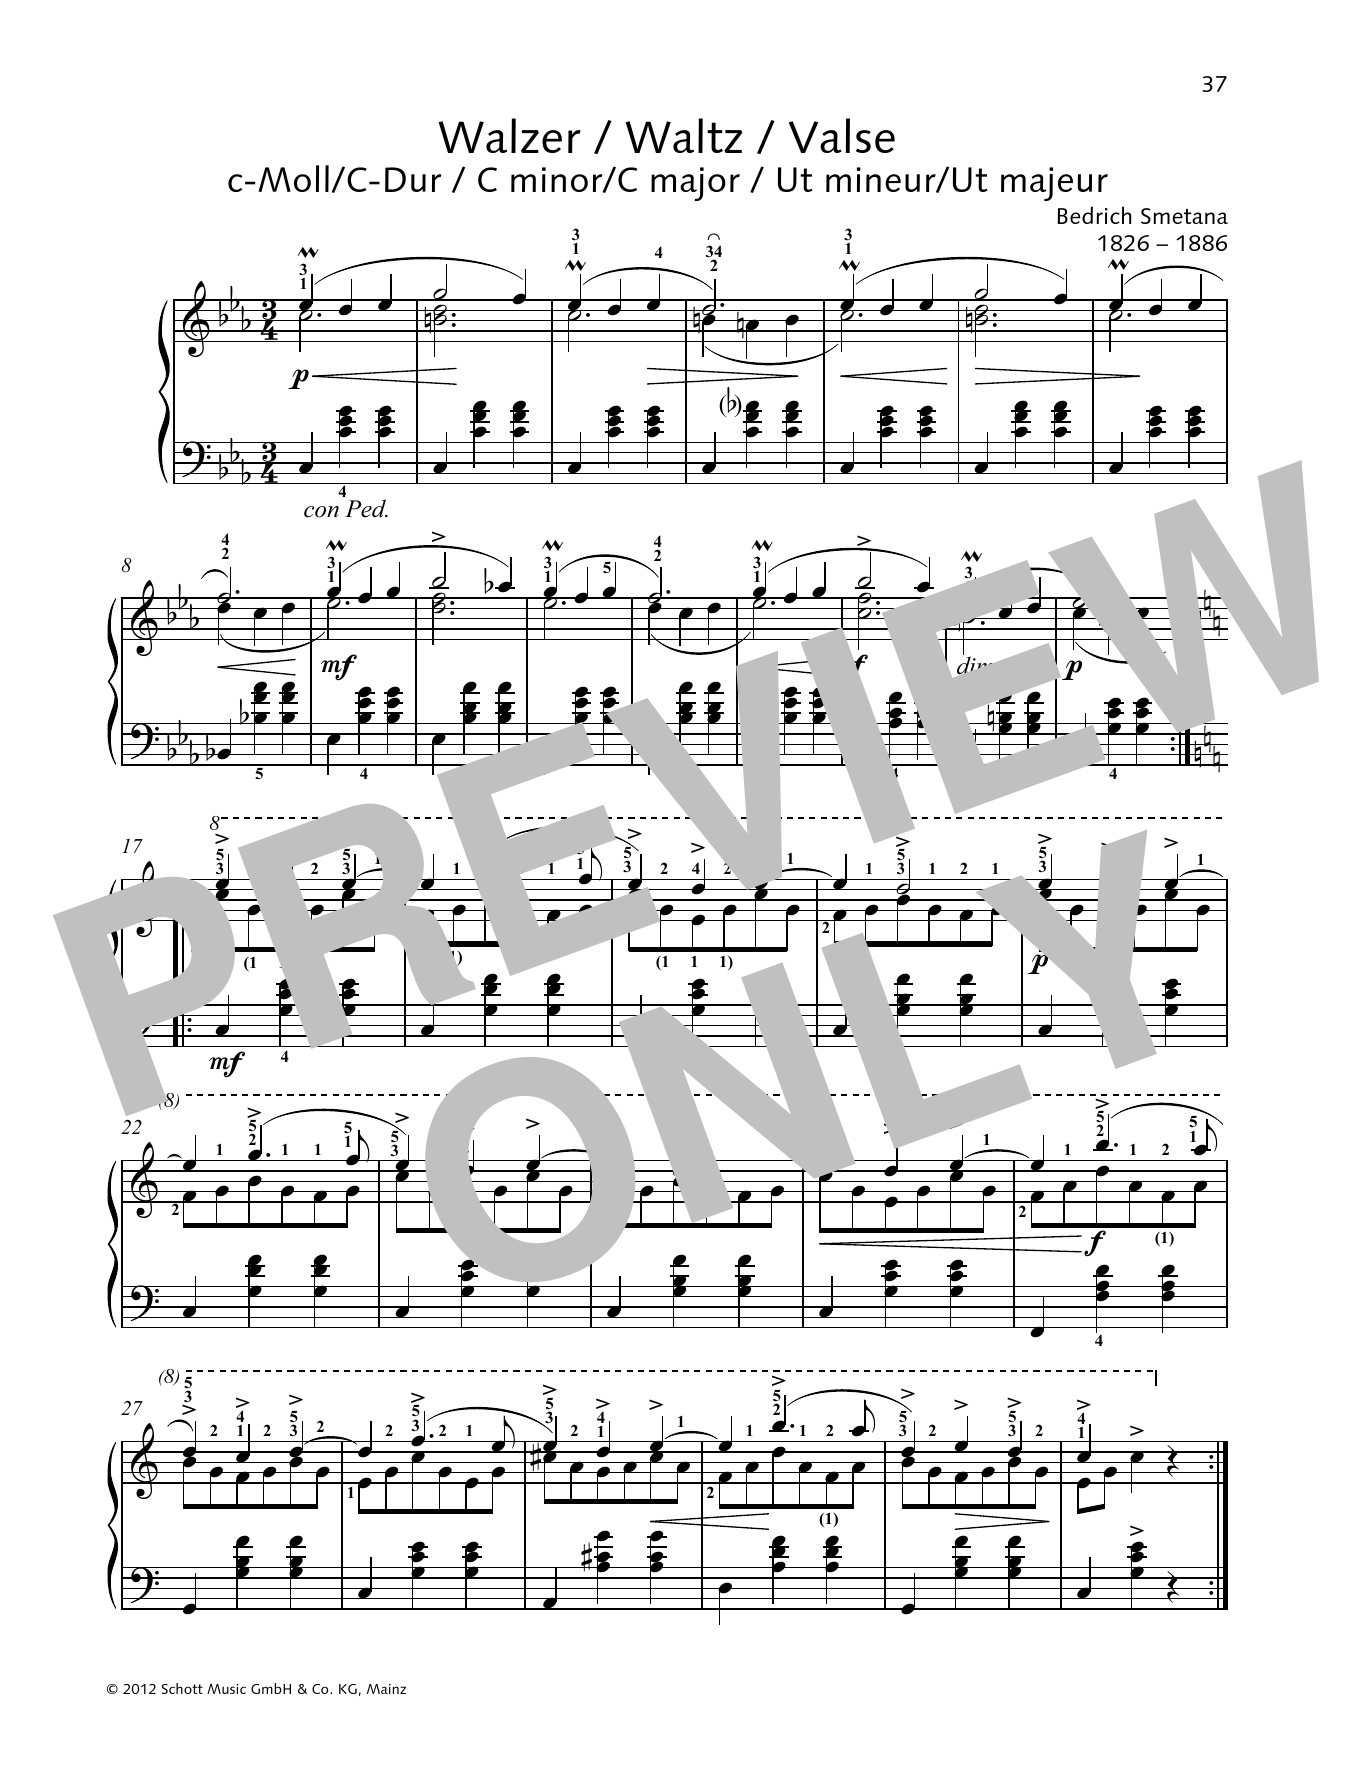 Download Bedrich Smetana Waltz C minor/C major Sheet Music